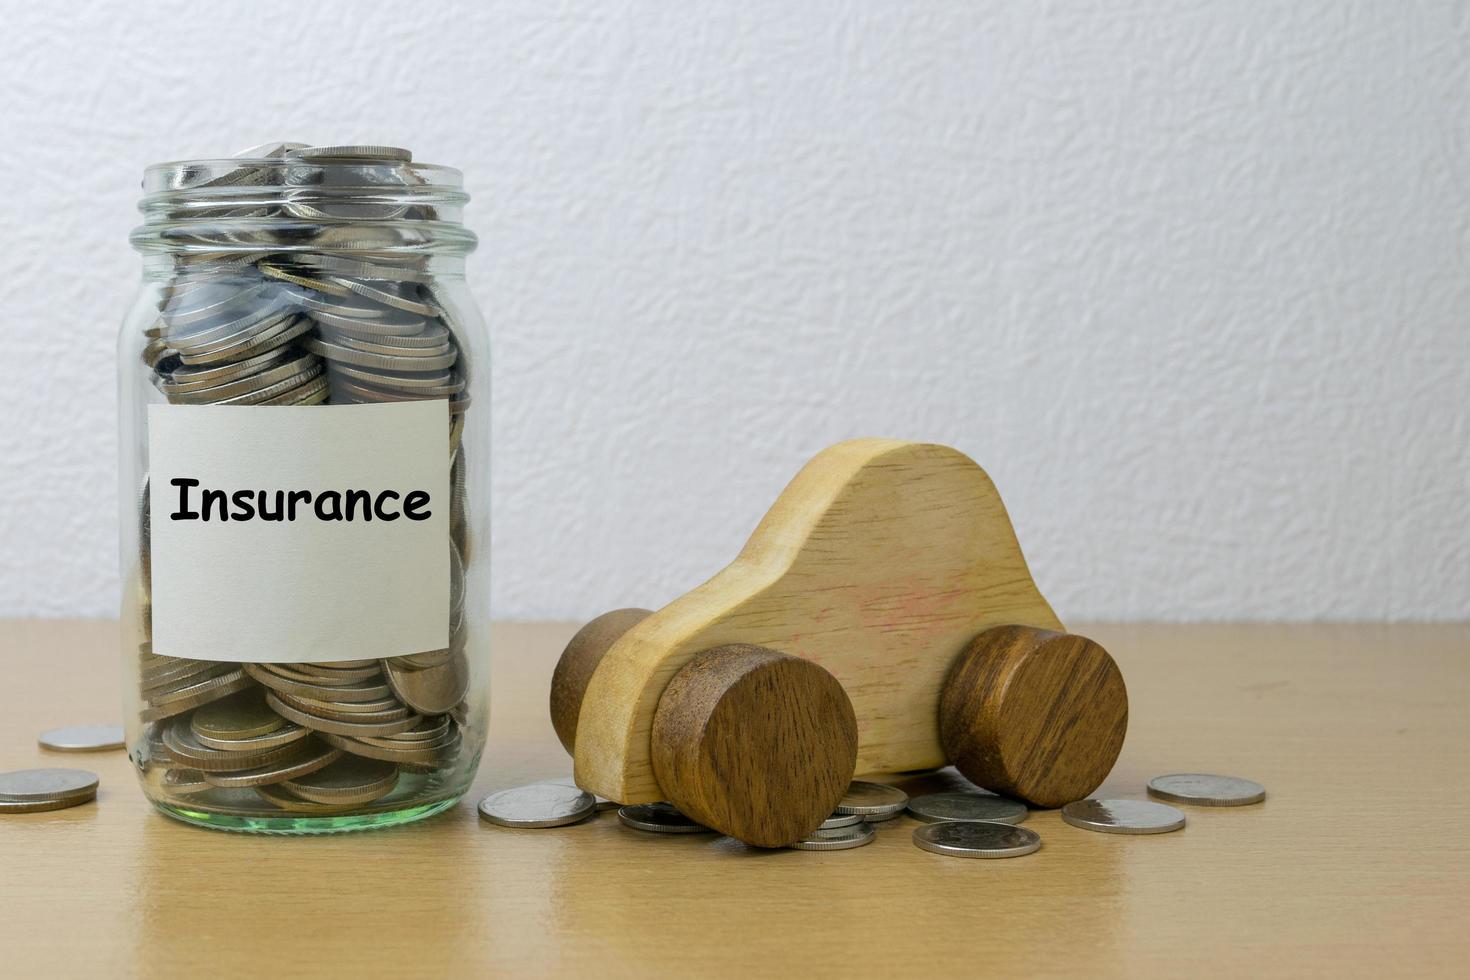 Money saving for Insurance in the glass bottle photo